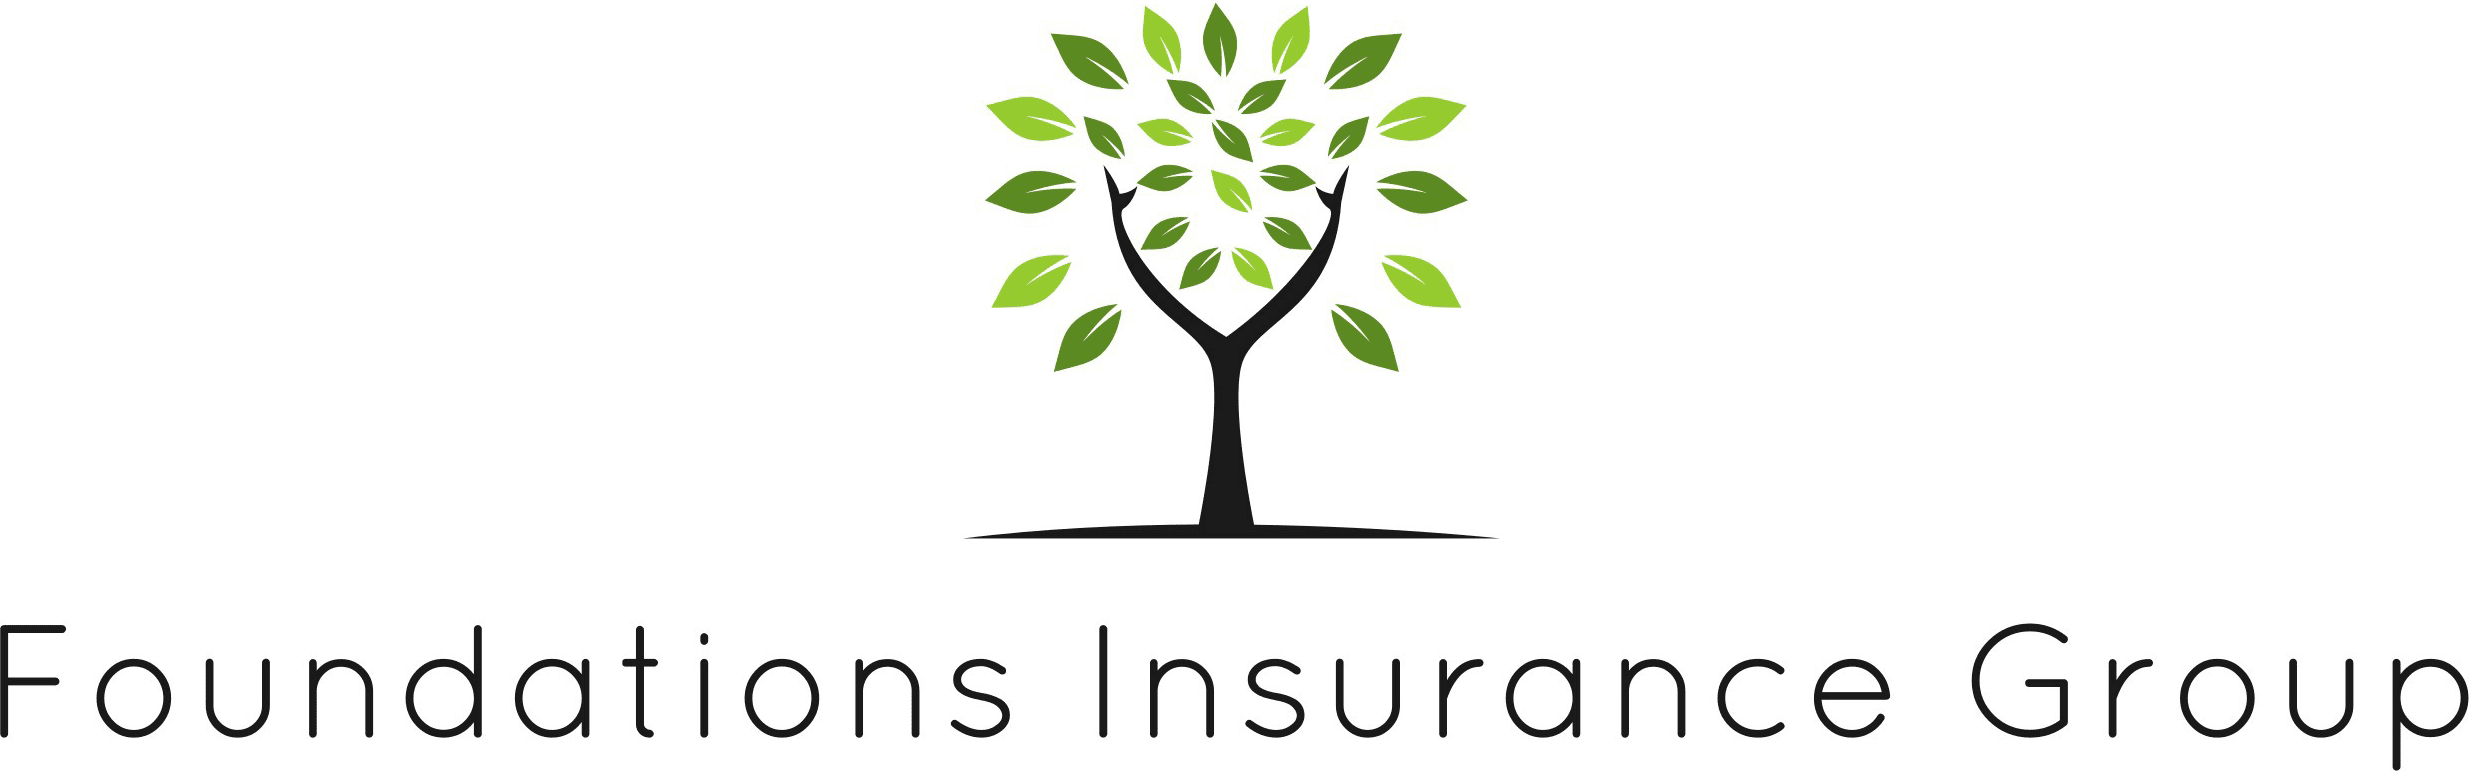 foundations-insurance-group-logo-2